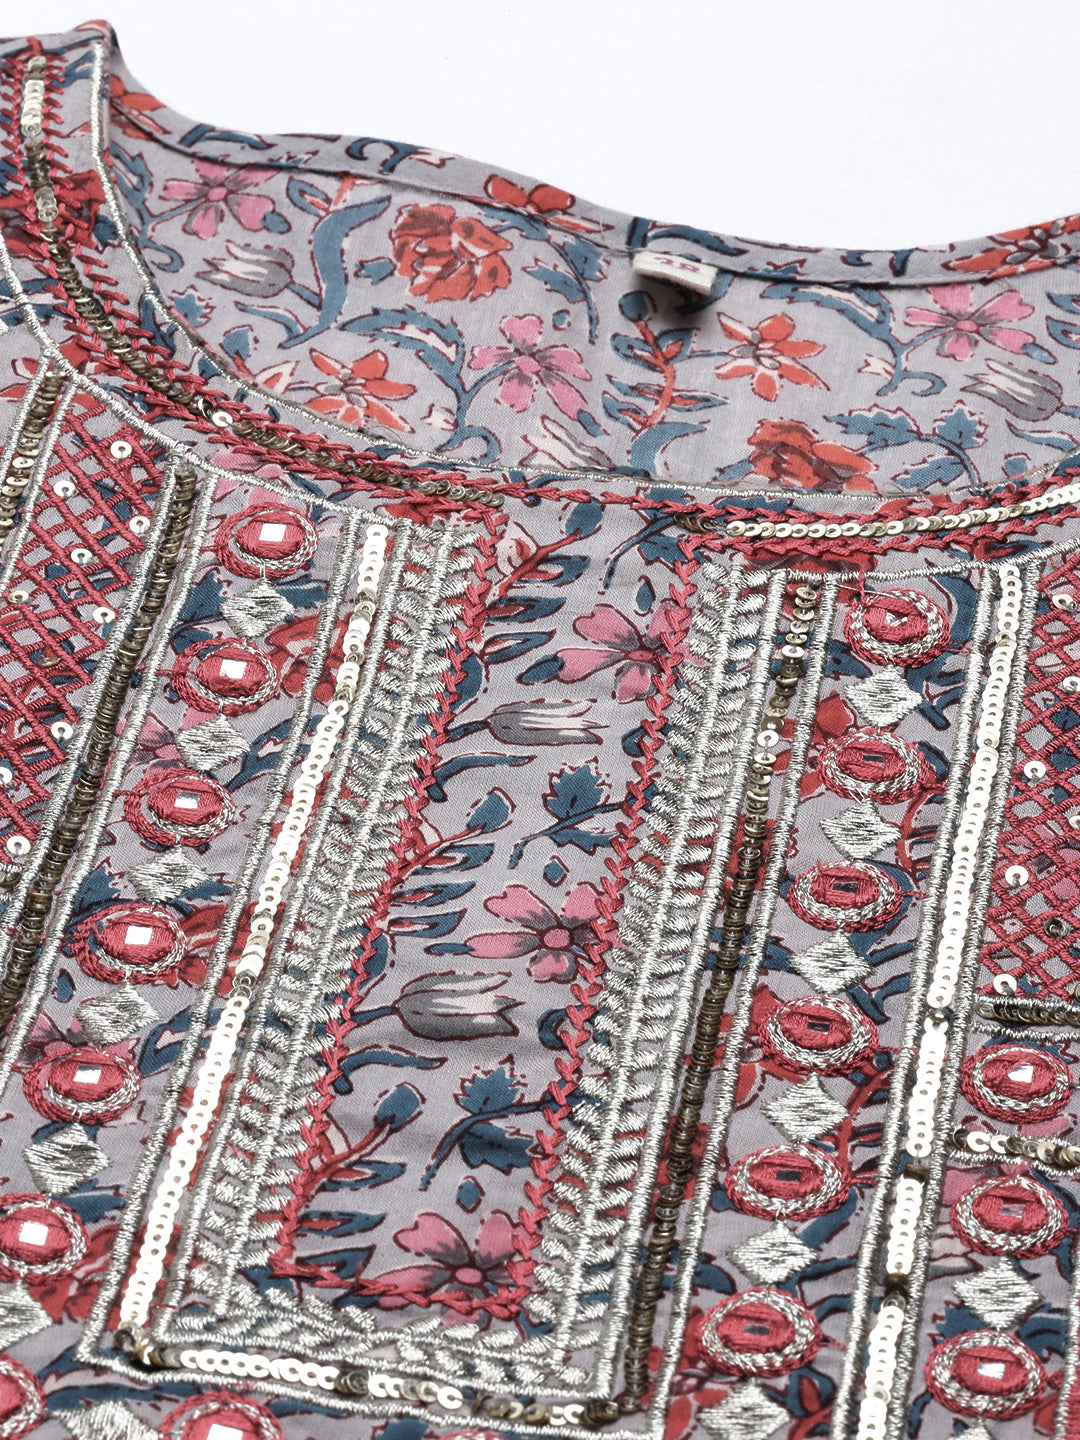 Neeru's Printed Color Cotton Fabric Tunic